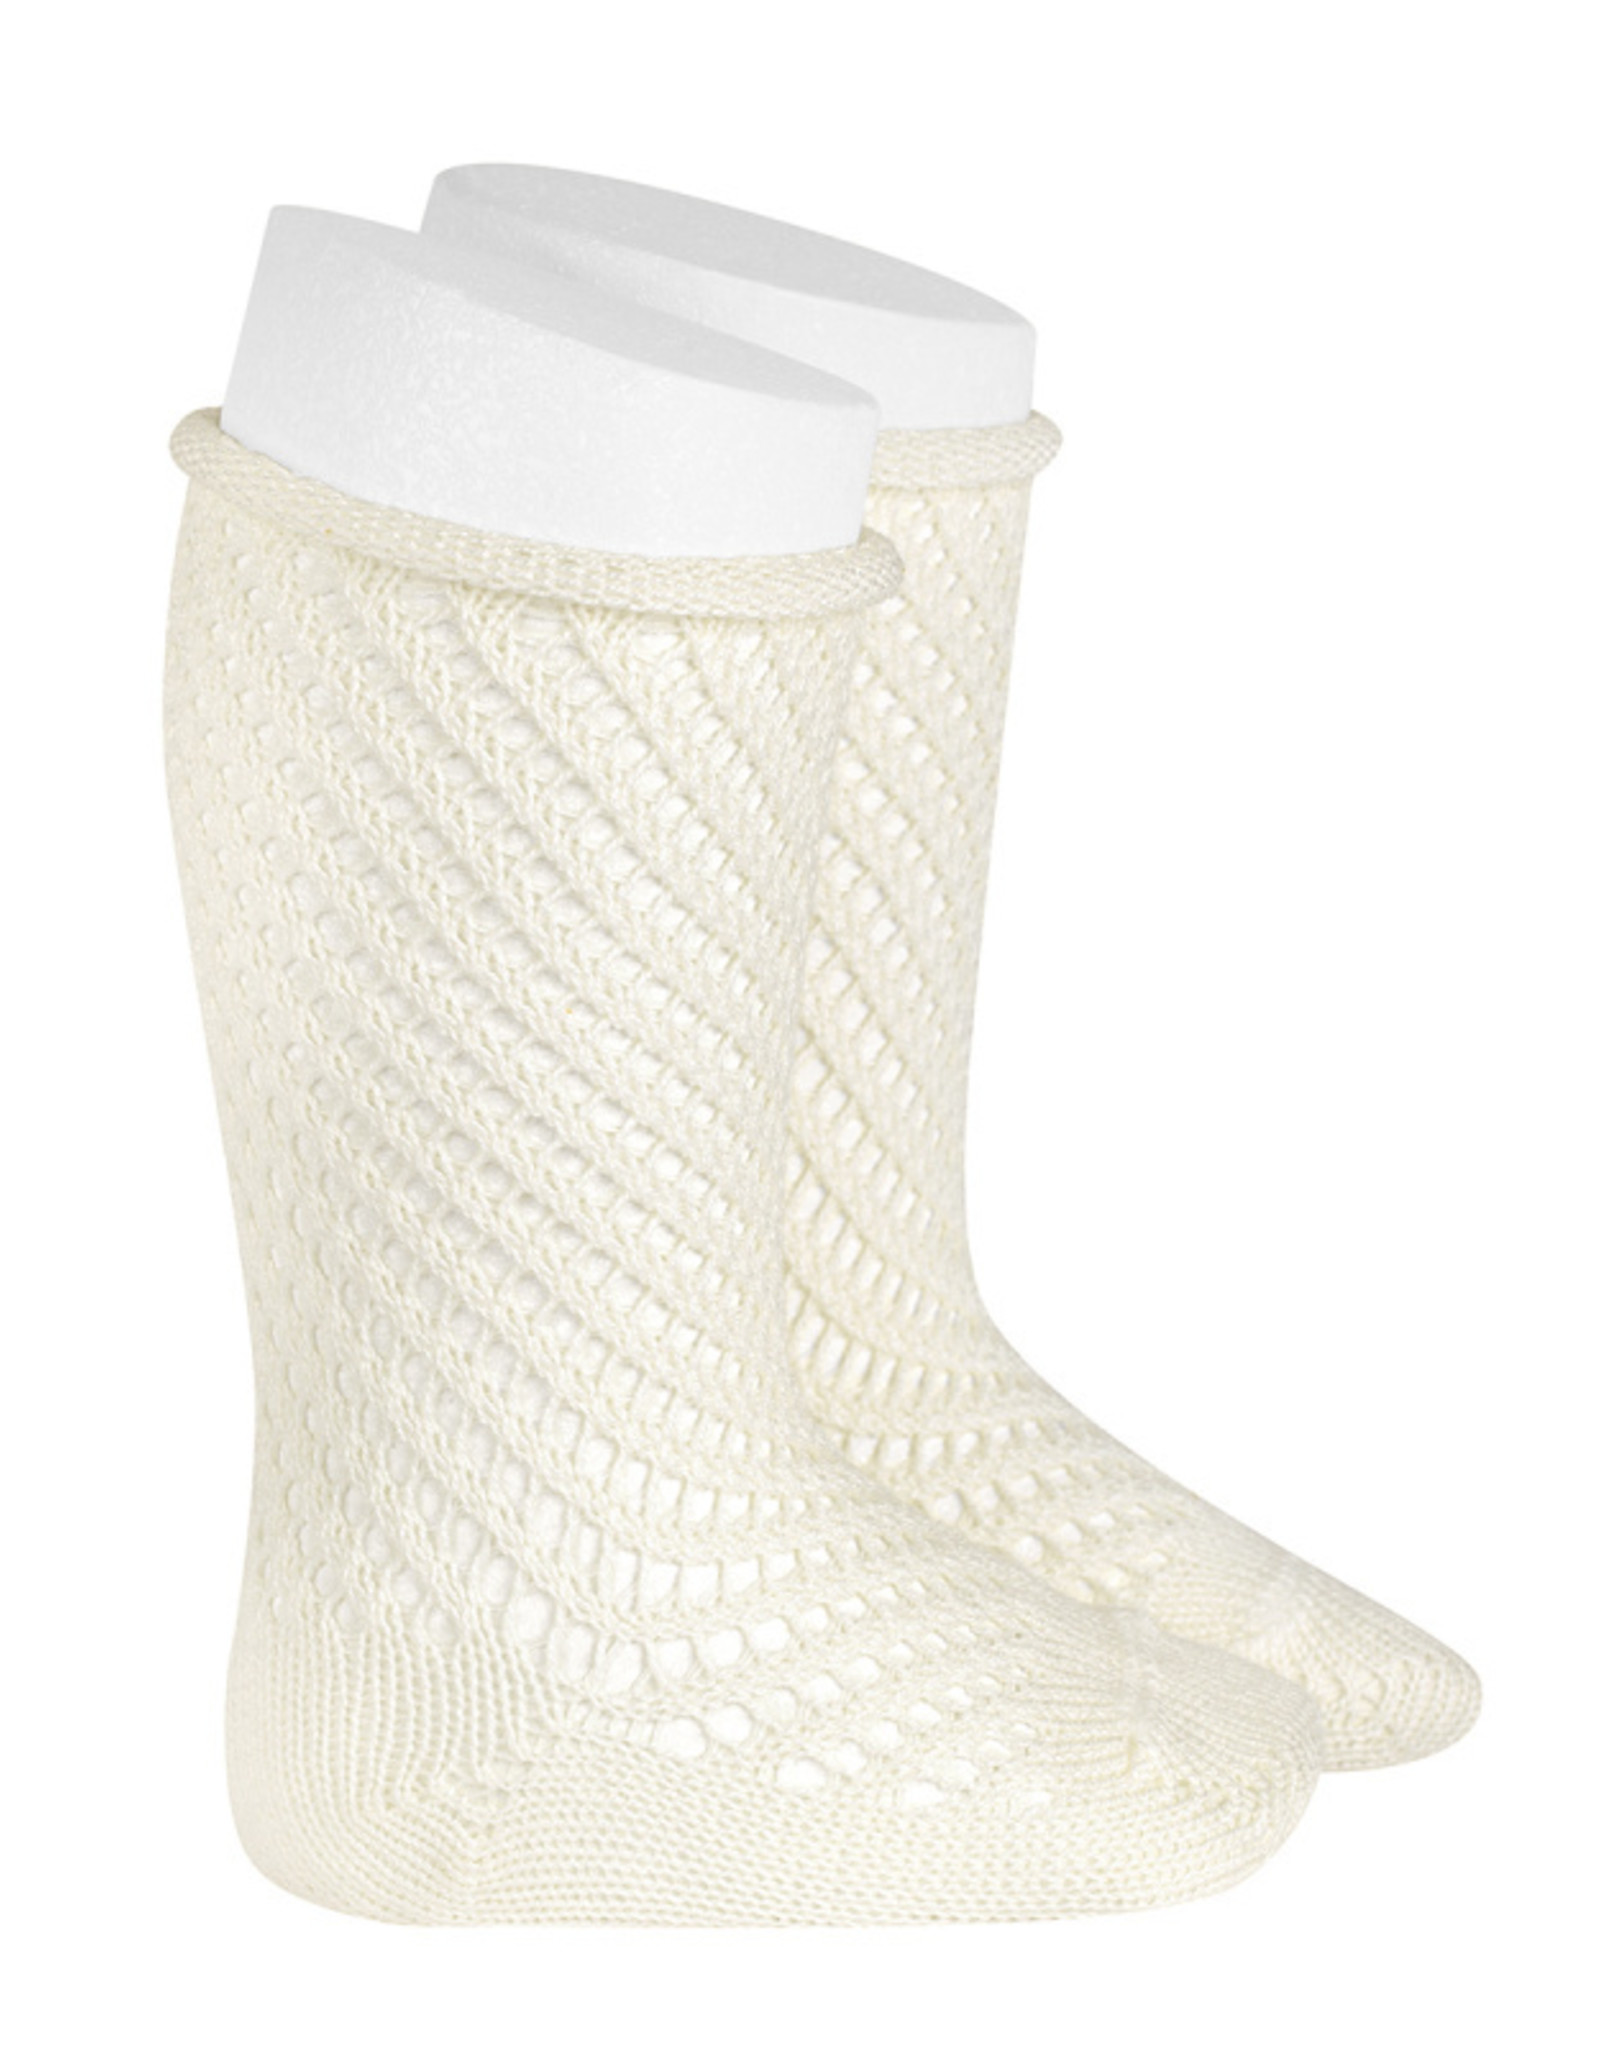 Condor Condor Crochet Knee Sock with Rolled Cuff